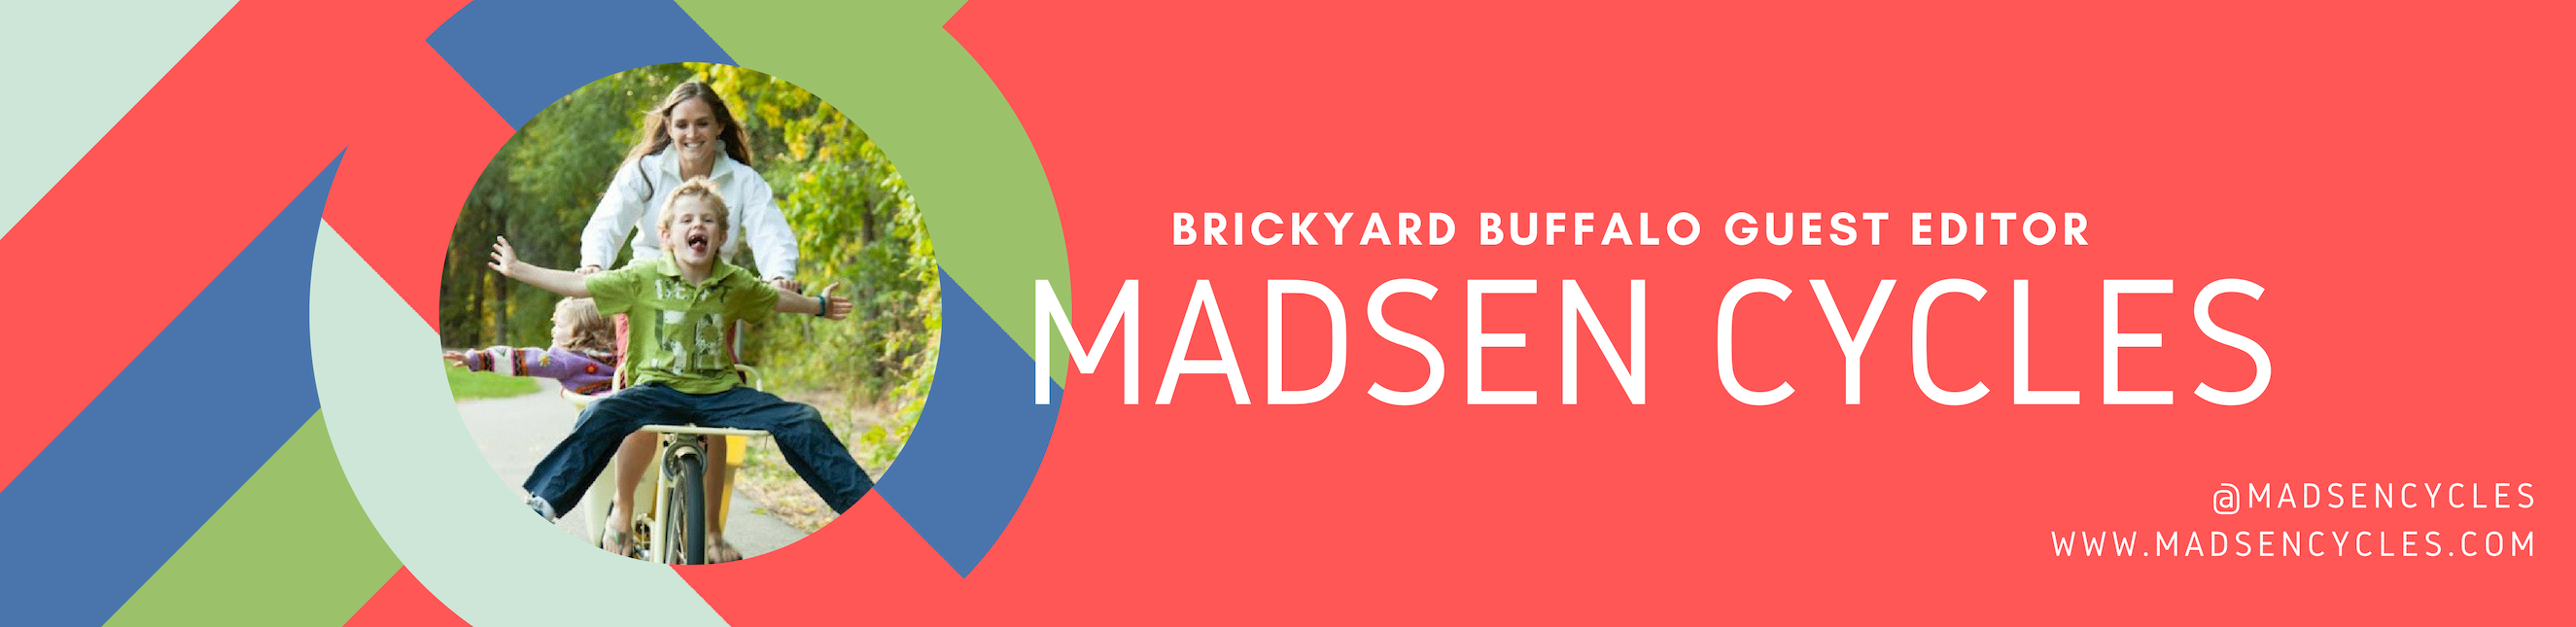 Brickyard Buffalo / MADSEN Cycles Guest Editor Week